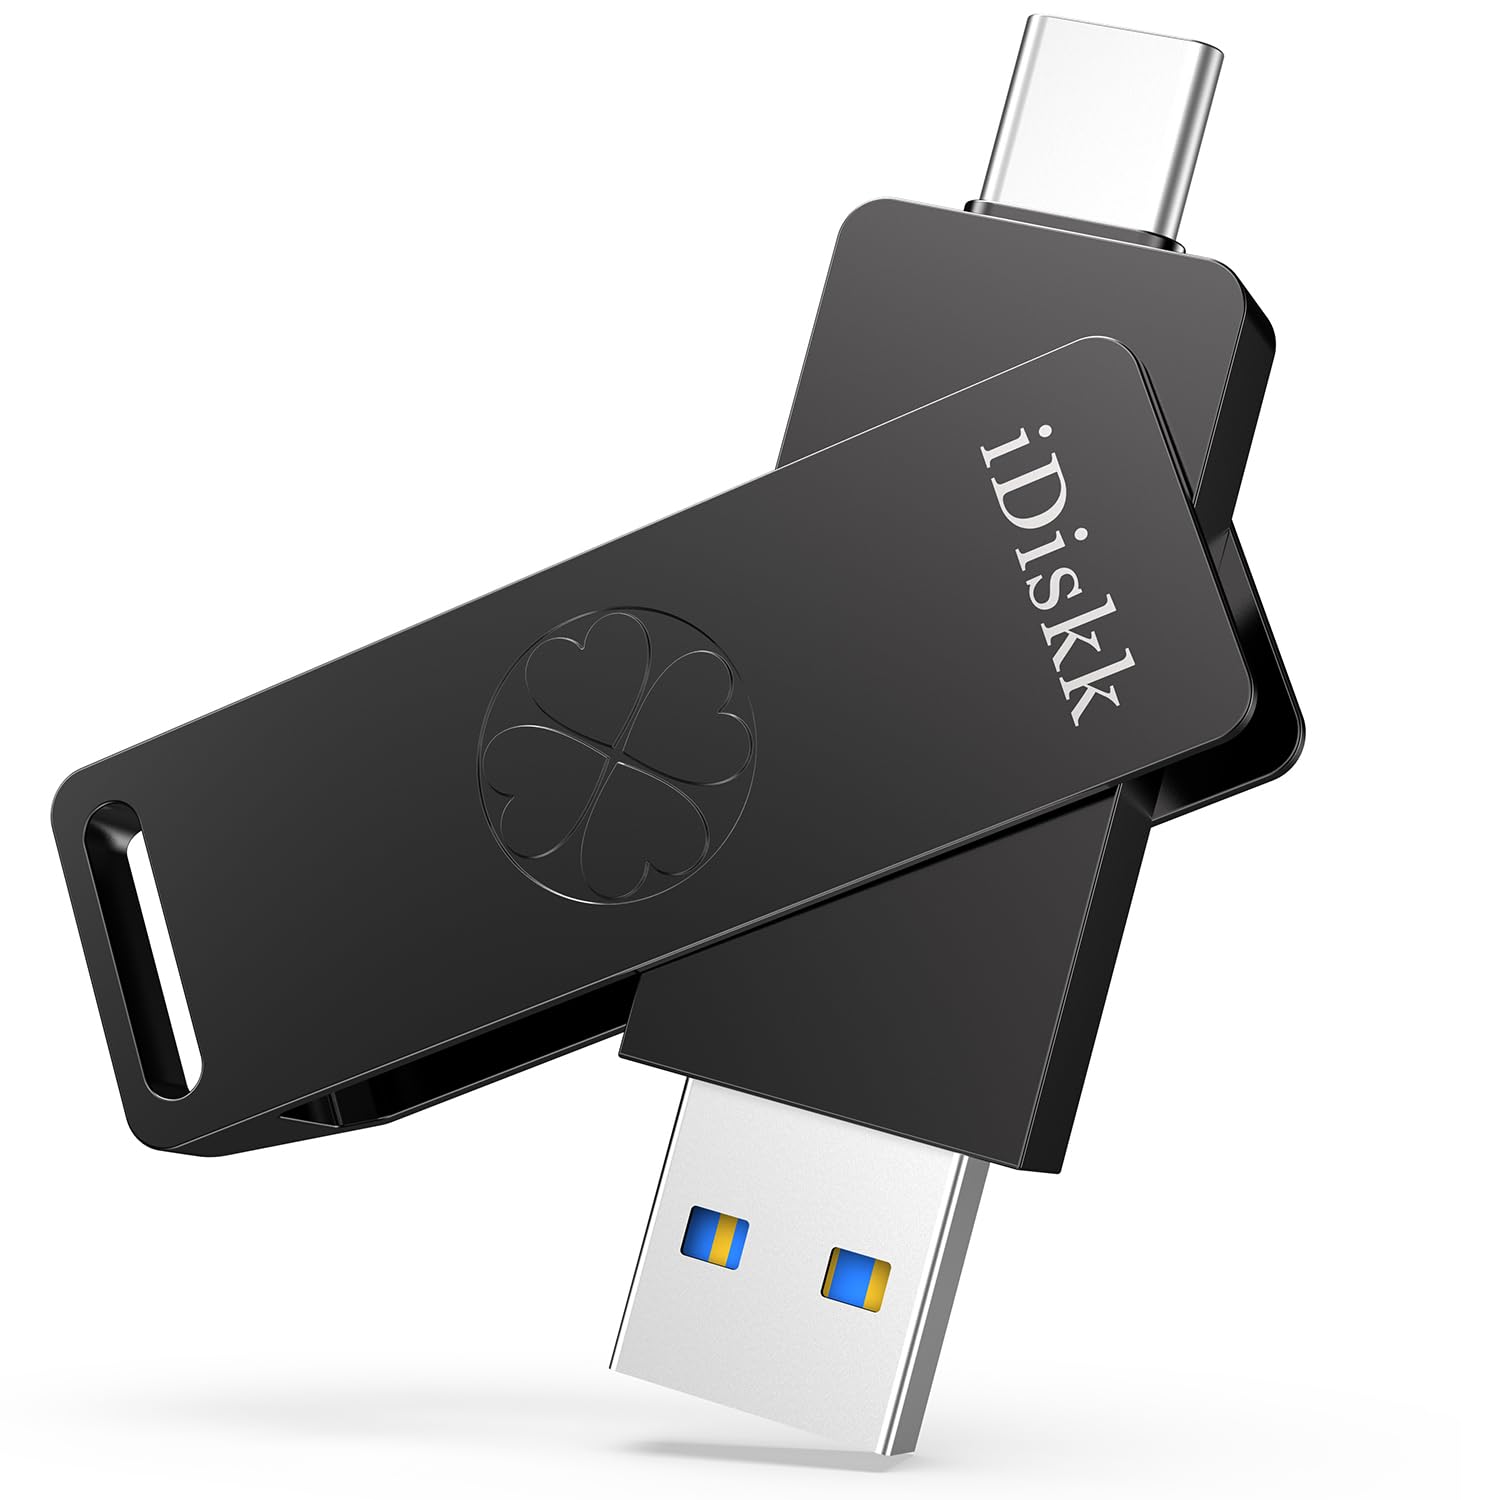 Plug-Play iDiskk 1TB Super Fast Solid State Flash Drive Photo